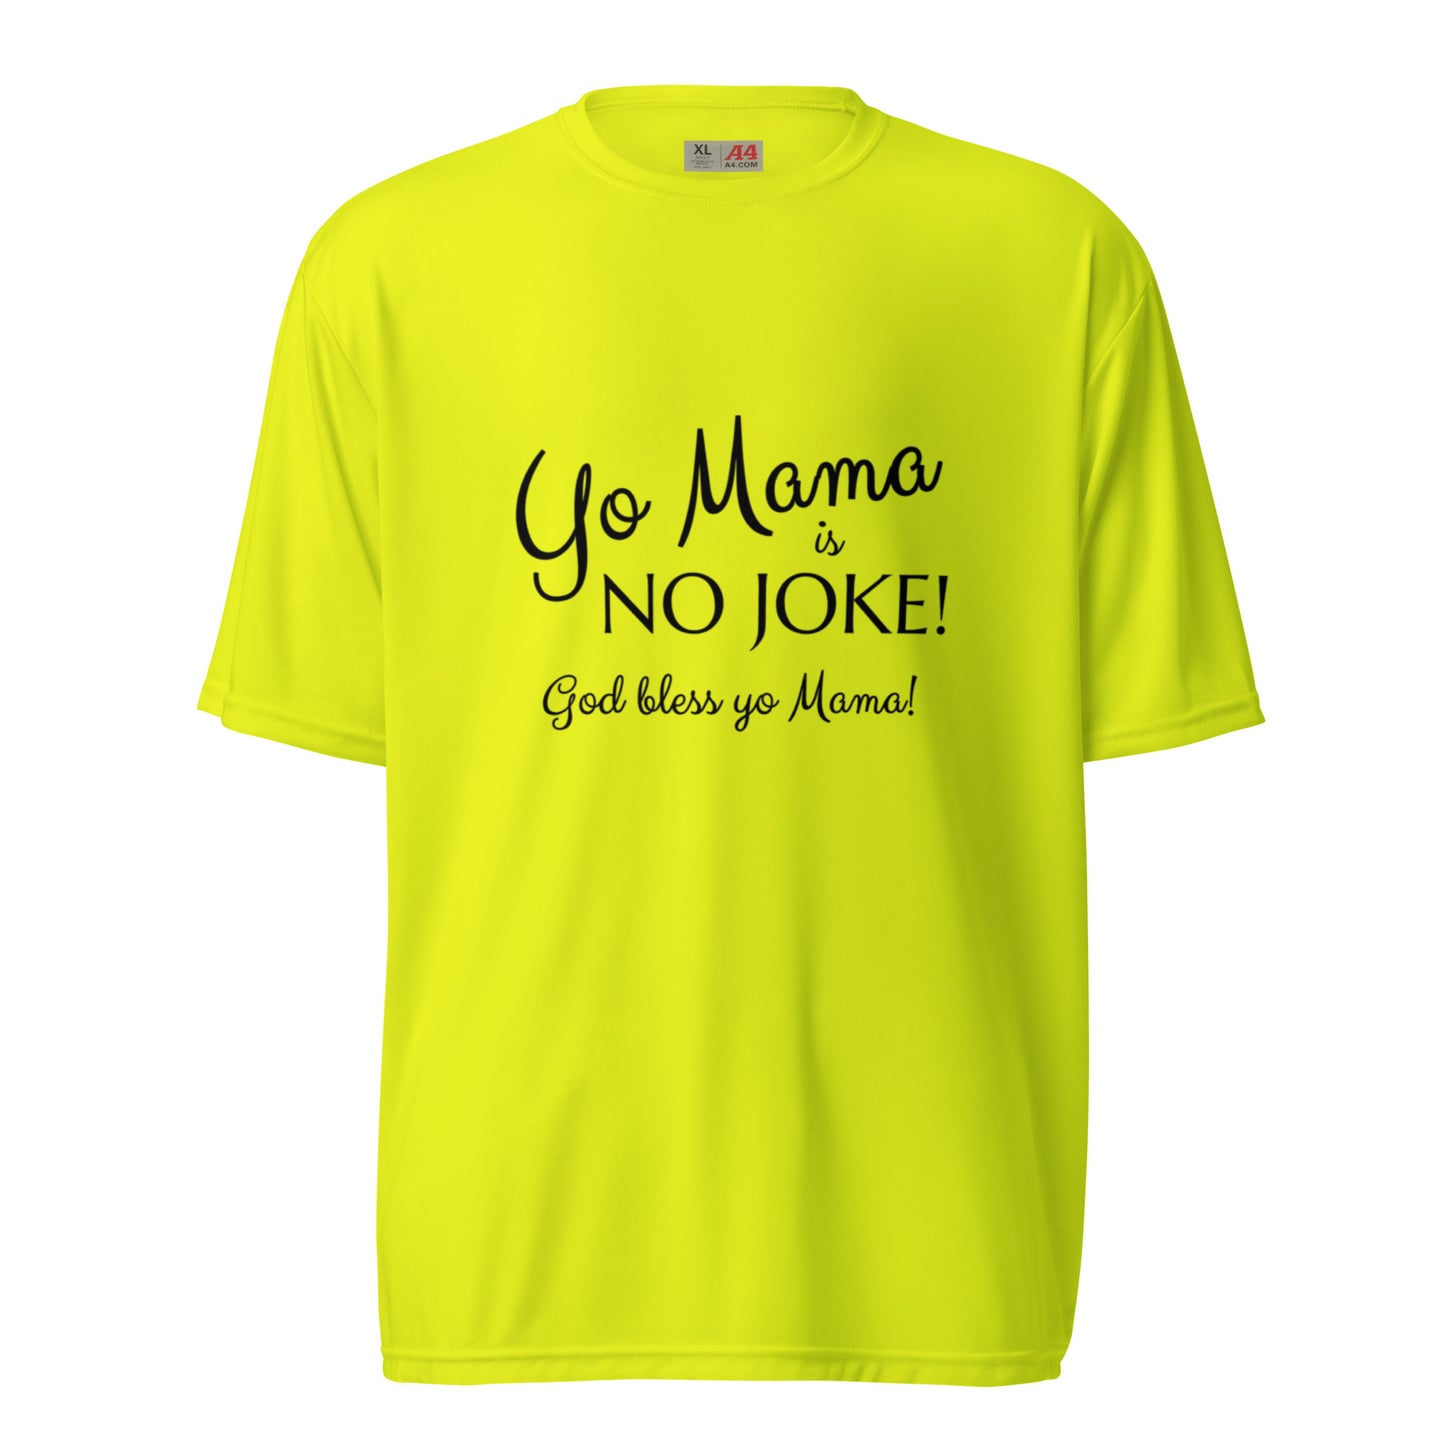 Yo Mama unisex performance crew neck t-shirt - Black Print